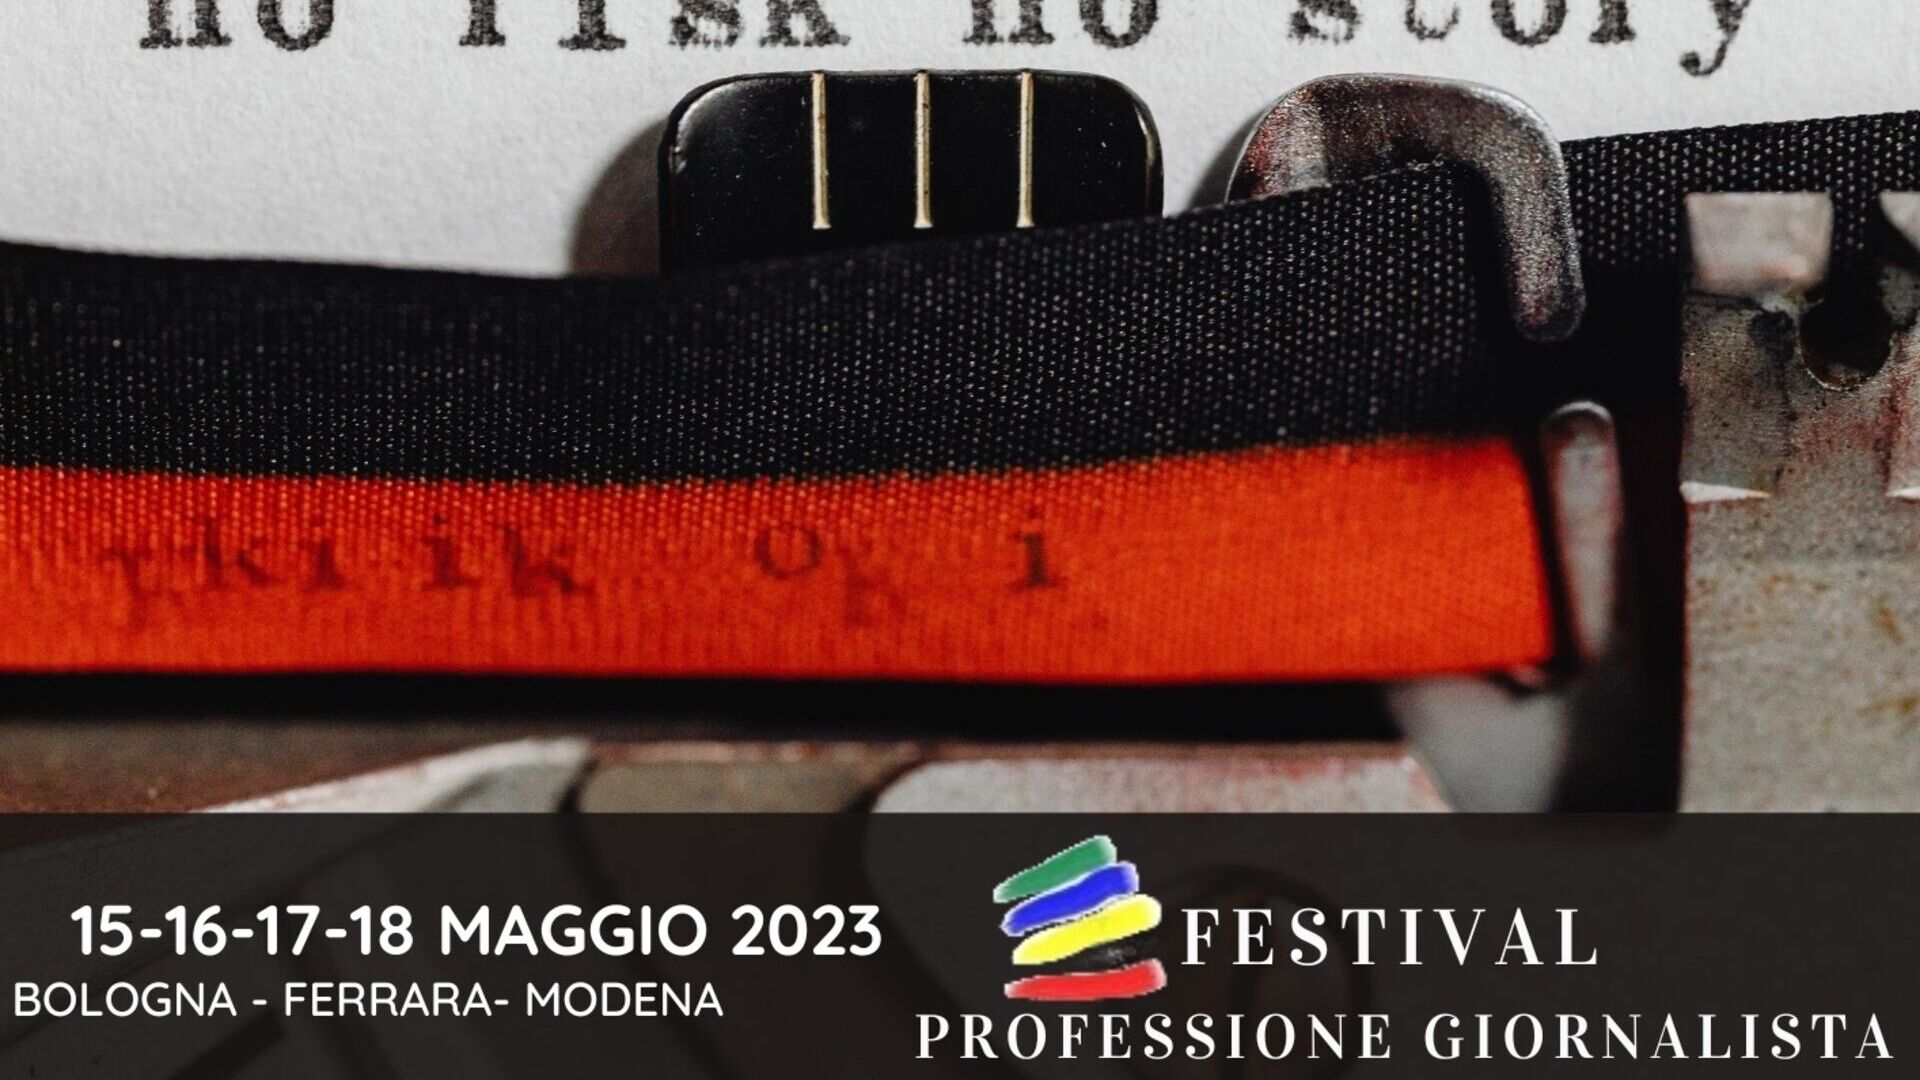 Toimittajan ammatti: "Professione Giornalista" -festivaalin 2023 painoksen avainvisuaali (Bologna, Ferrara, Modena, 15.-16.-17.-18.)